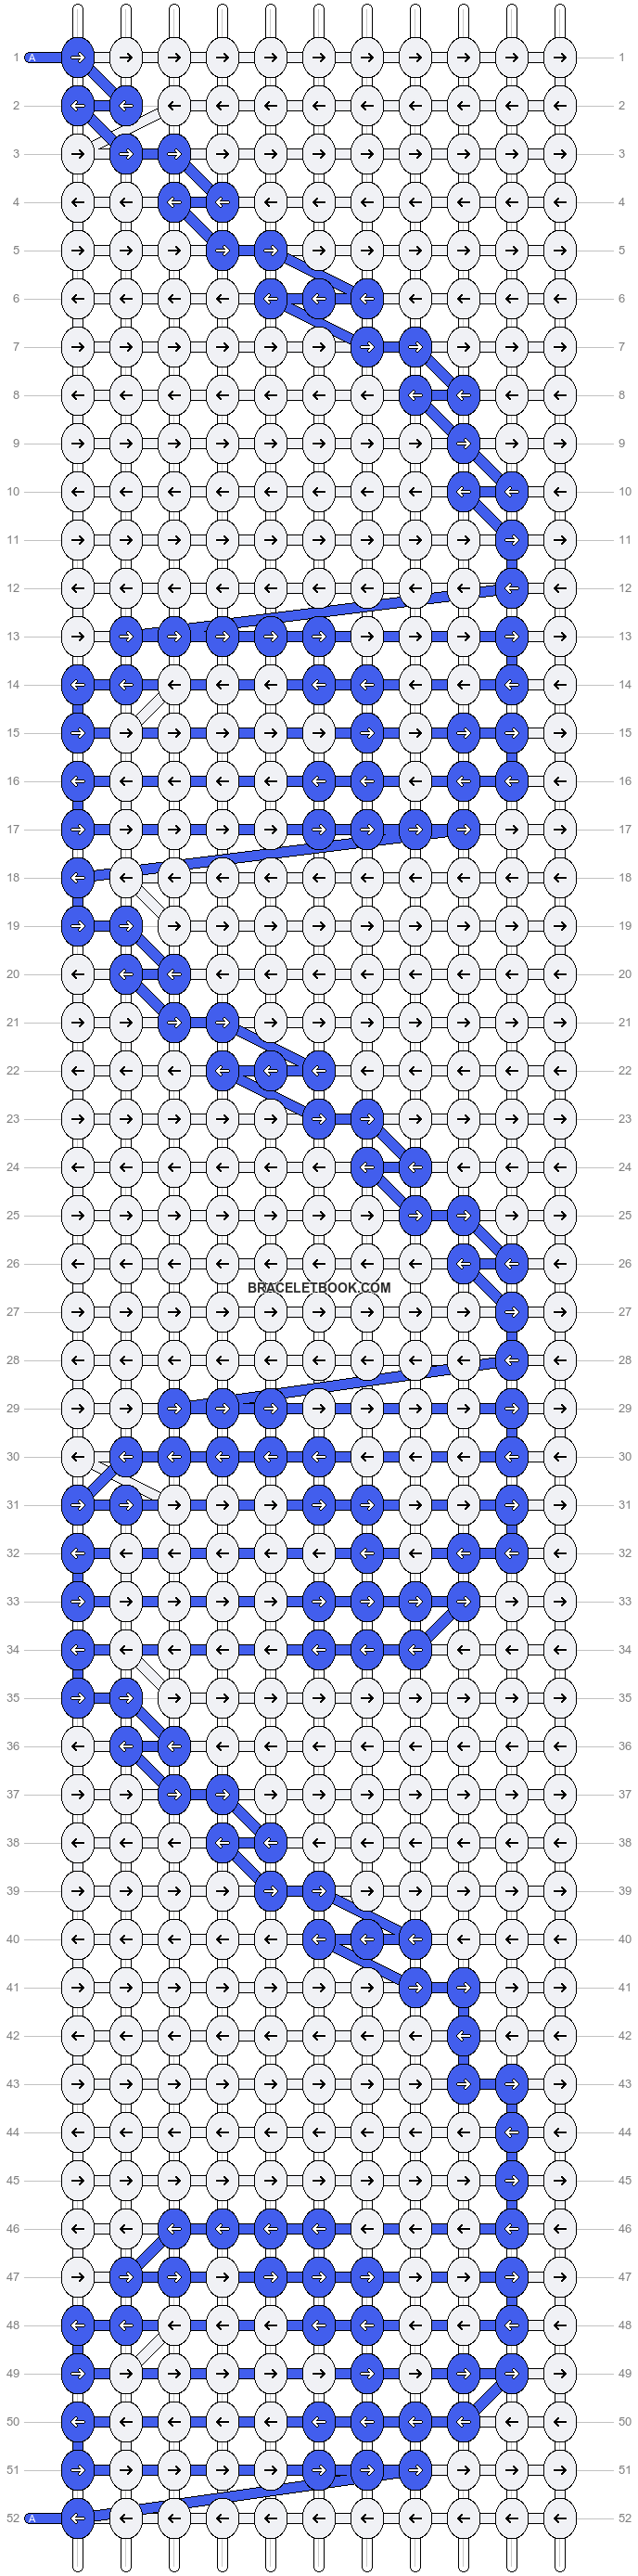 Alpha pattern #45382 variation #69855 pattern